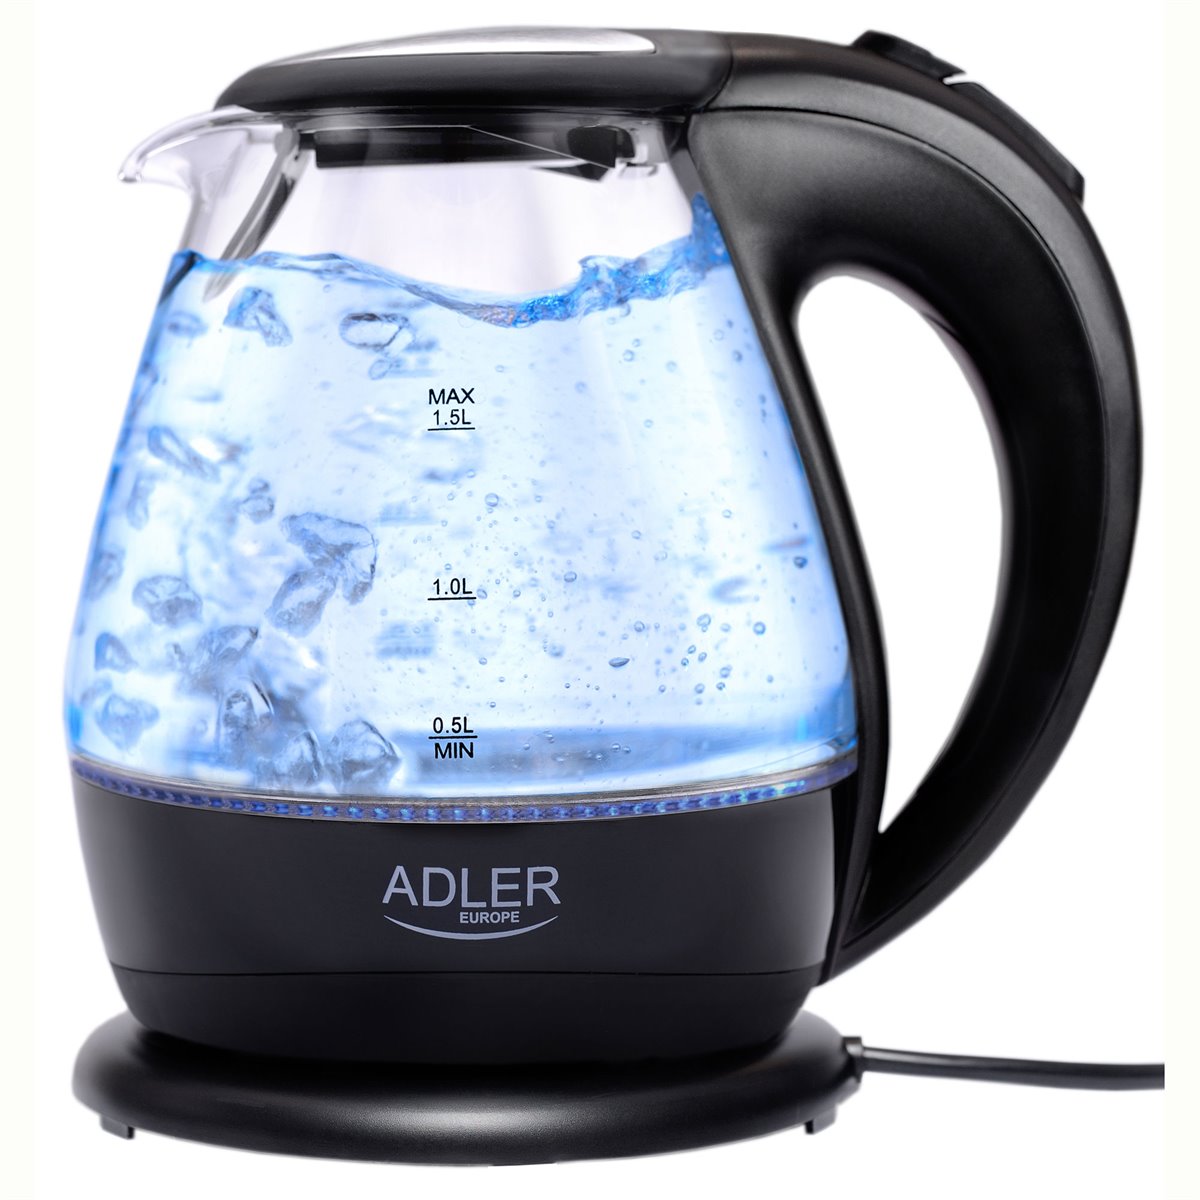 Adler AD 1247 Hervidor Agua Eléctrico, 1,7 L, Jarra Cristal, Regulador  Temperatura, Resistencia Oculta, Transparente, 2200W